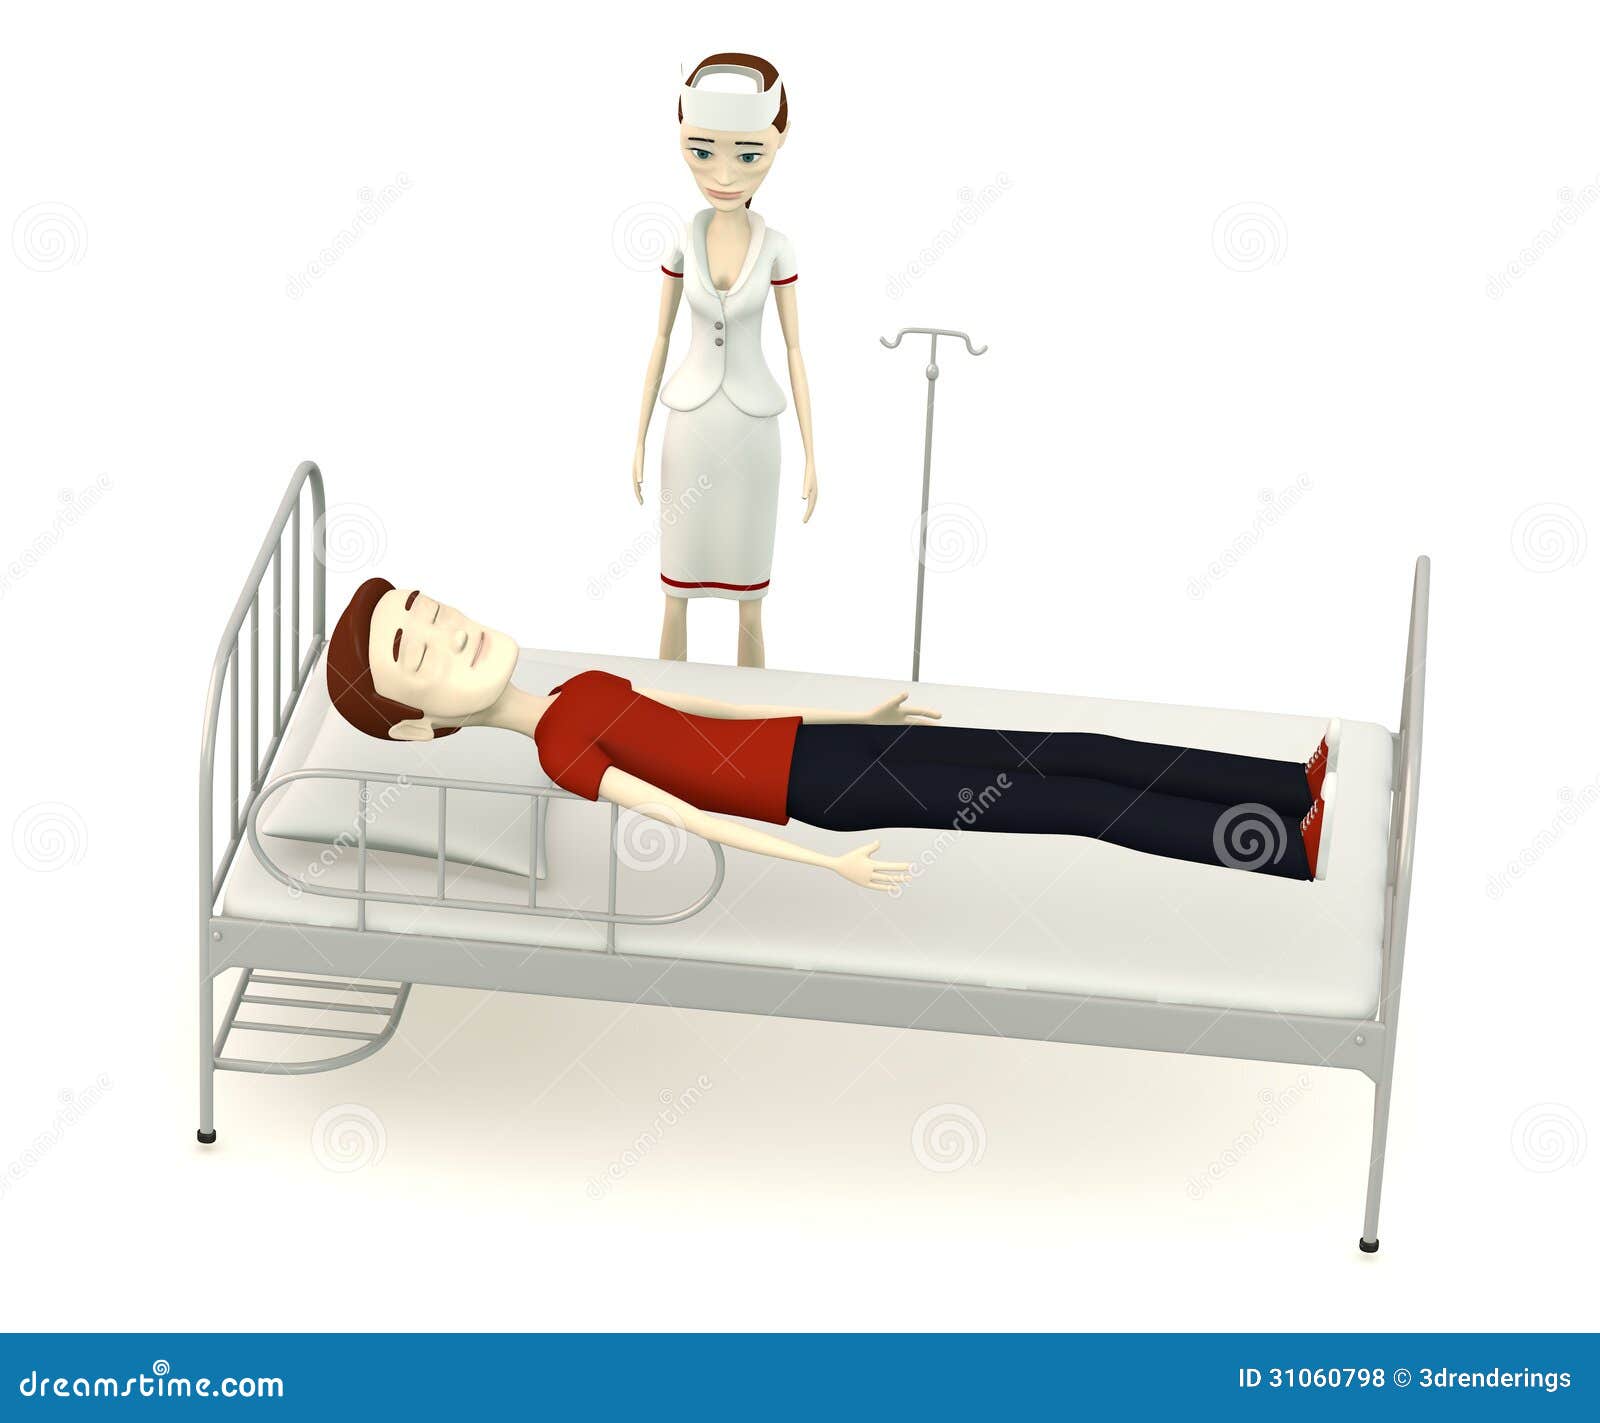 Cartoon Man On Hospital Bed With Nurse Royalty-Free Stock Image ...